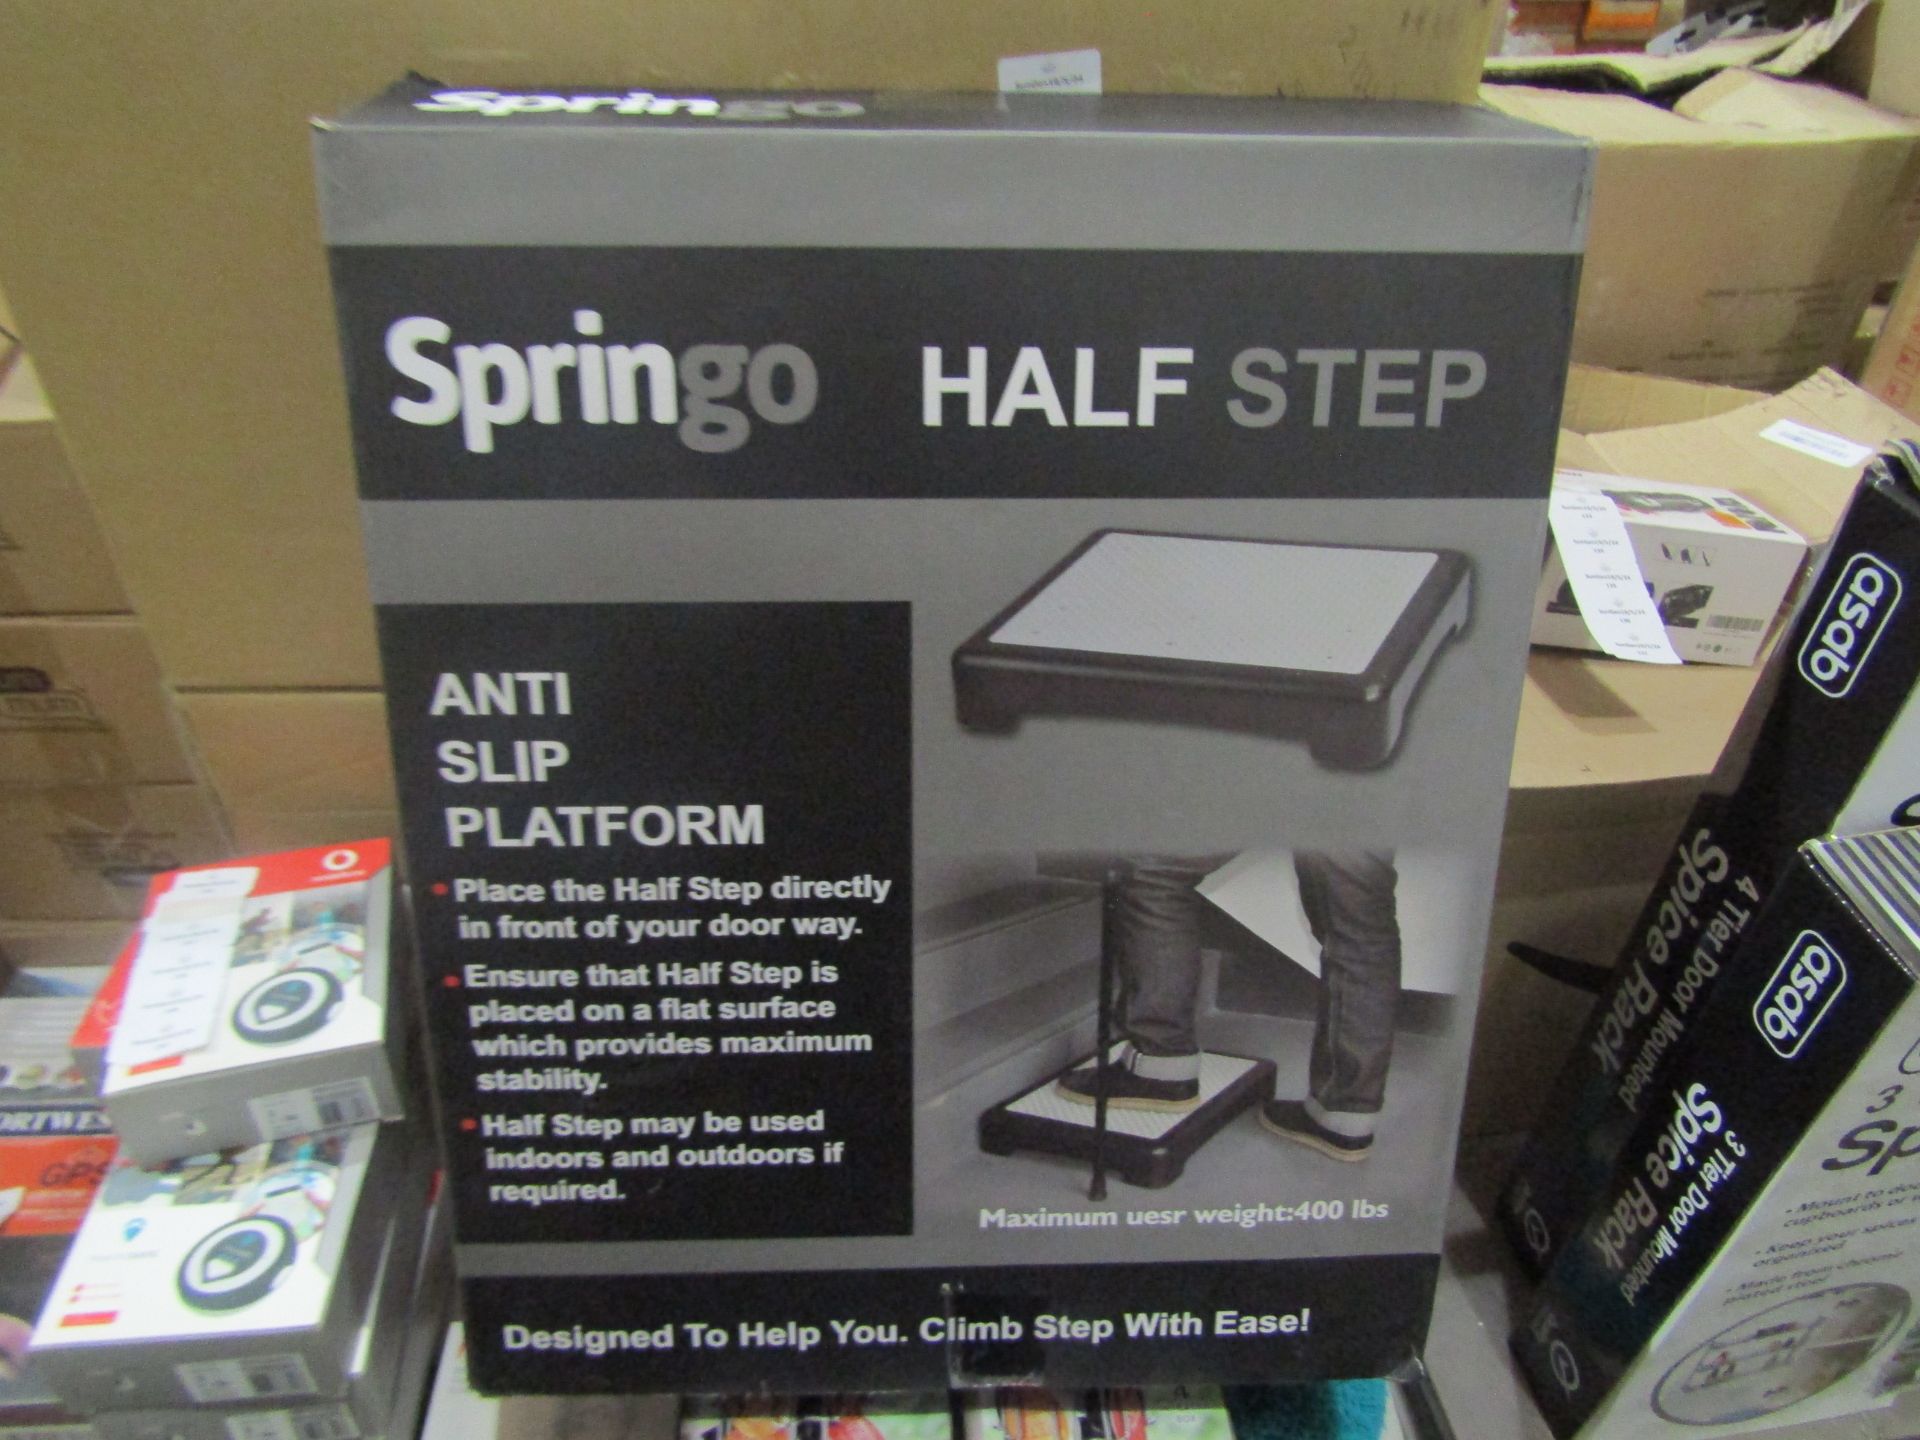 3x Springo Half Step Anti-Slip Platform - Unchecked & Boxed.